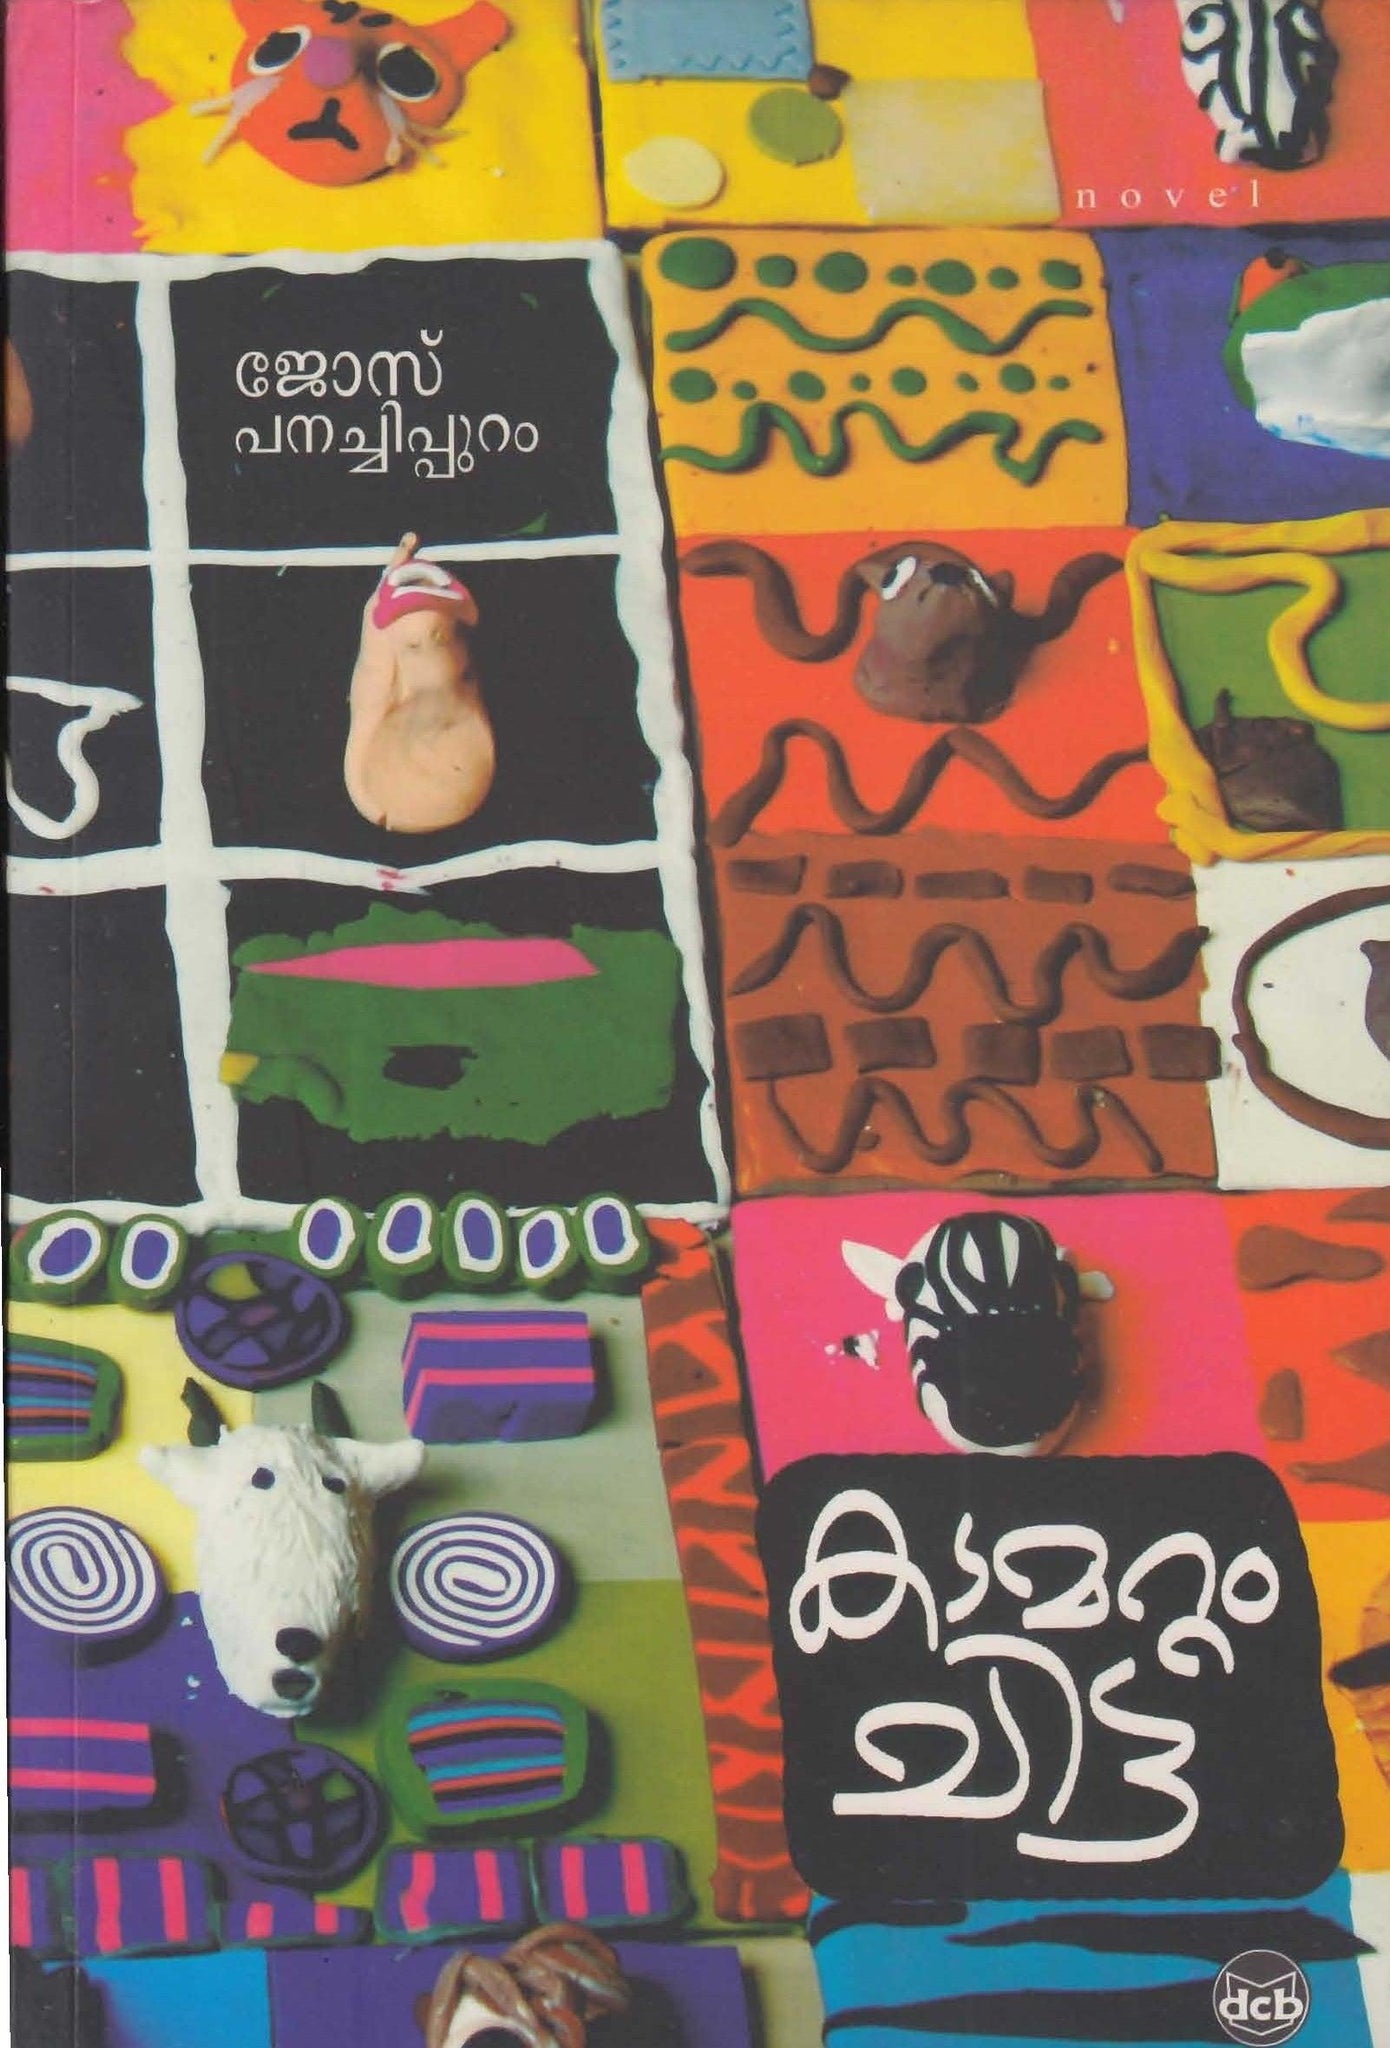 Kadamattam Chitta ( കടമറ്റം ചിട്ട ) Malayalam Book By Jose Panachipuram ( ജോസ് പനച്ചിപ്പുറം ) Online at The Book Addicts